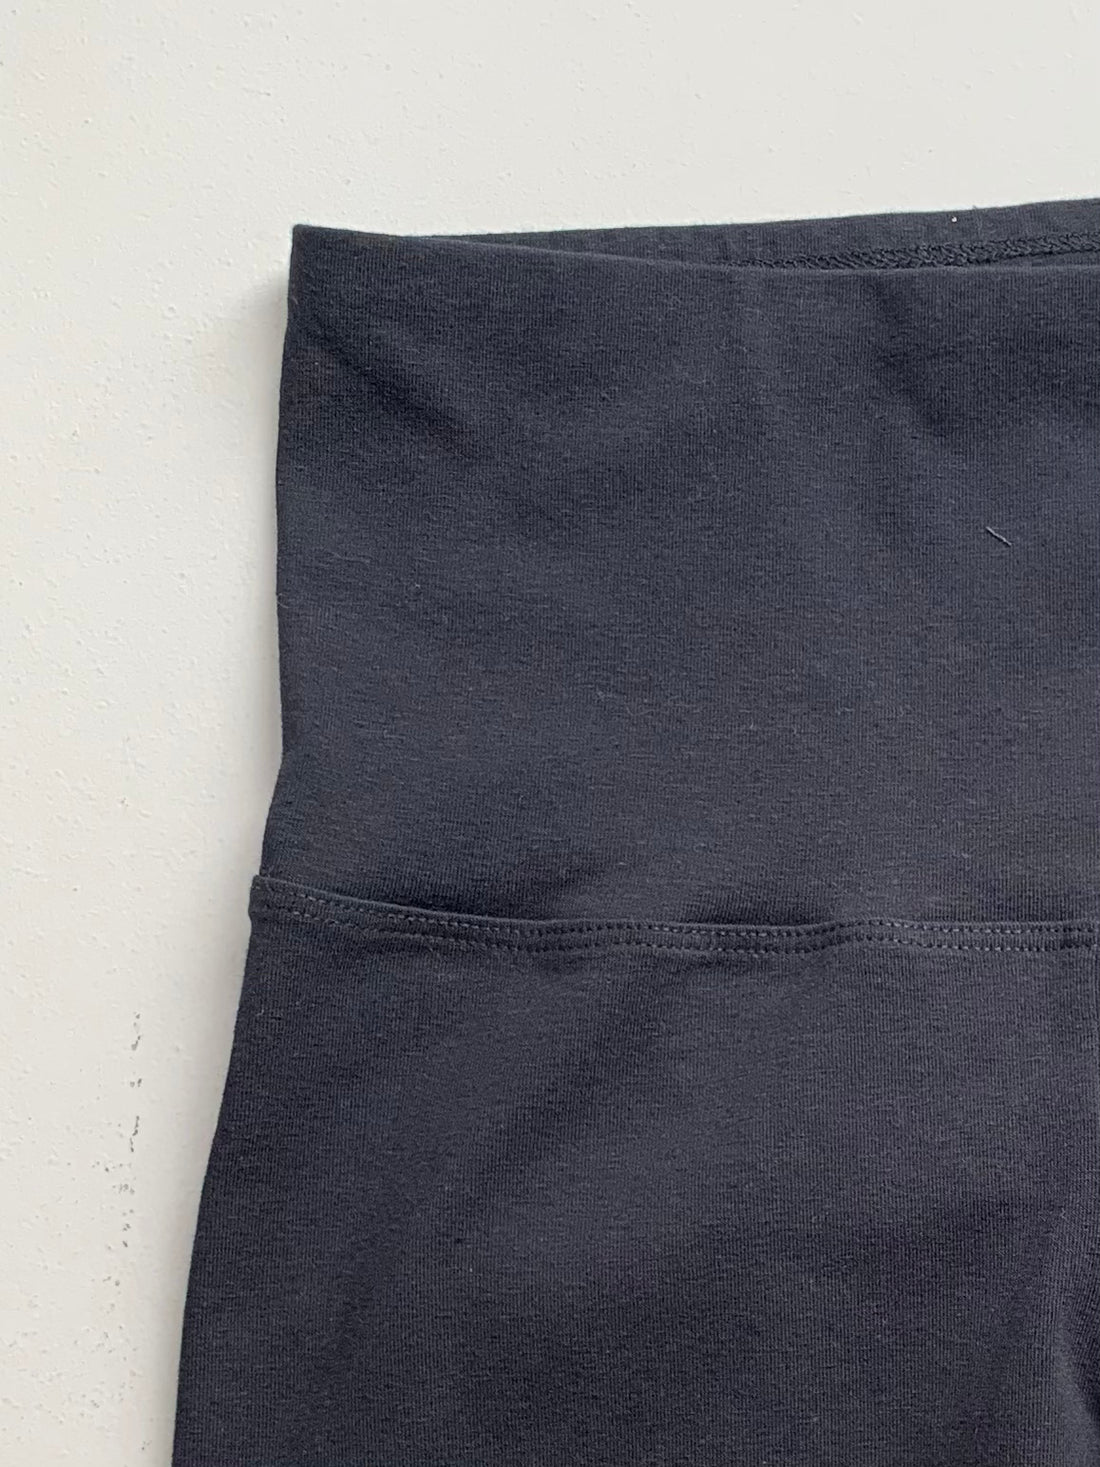 Unisex organic cotton shorts No6068u